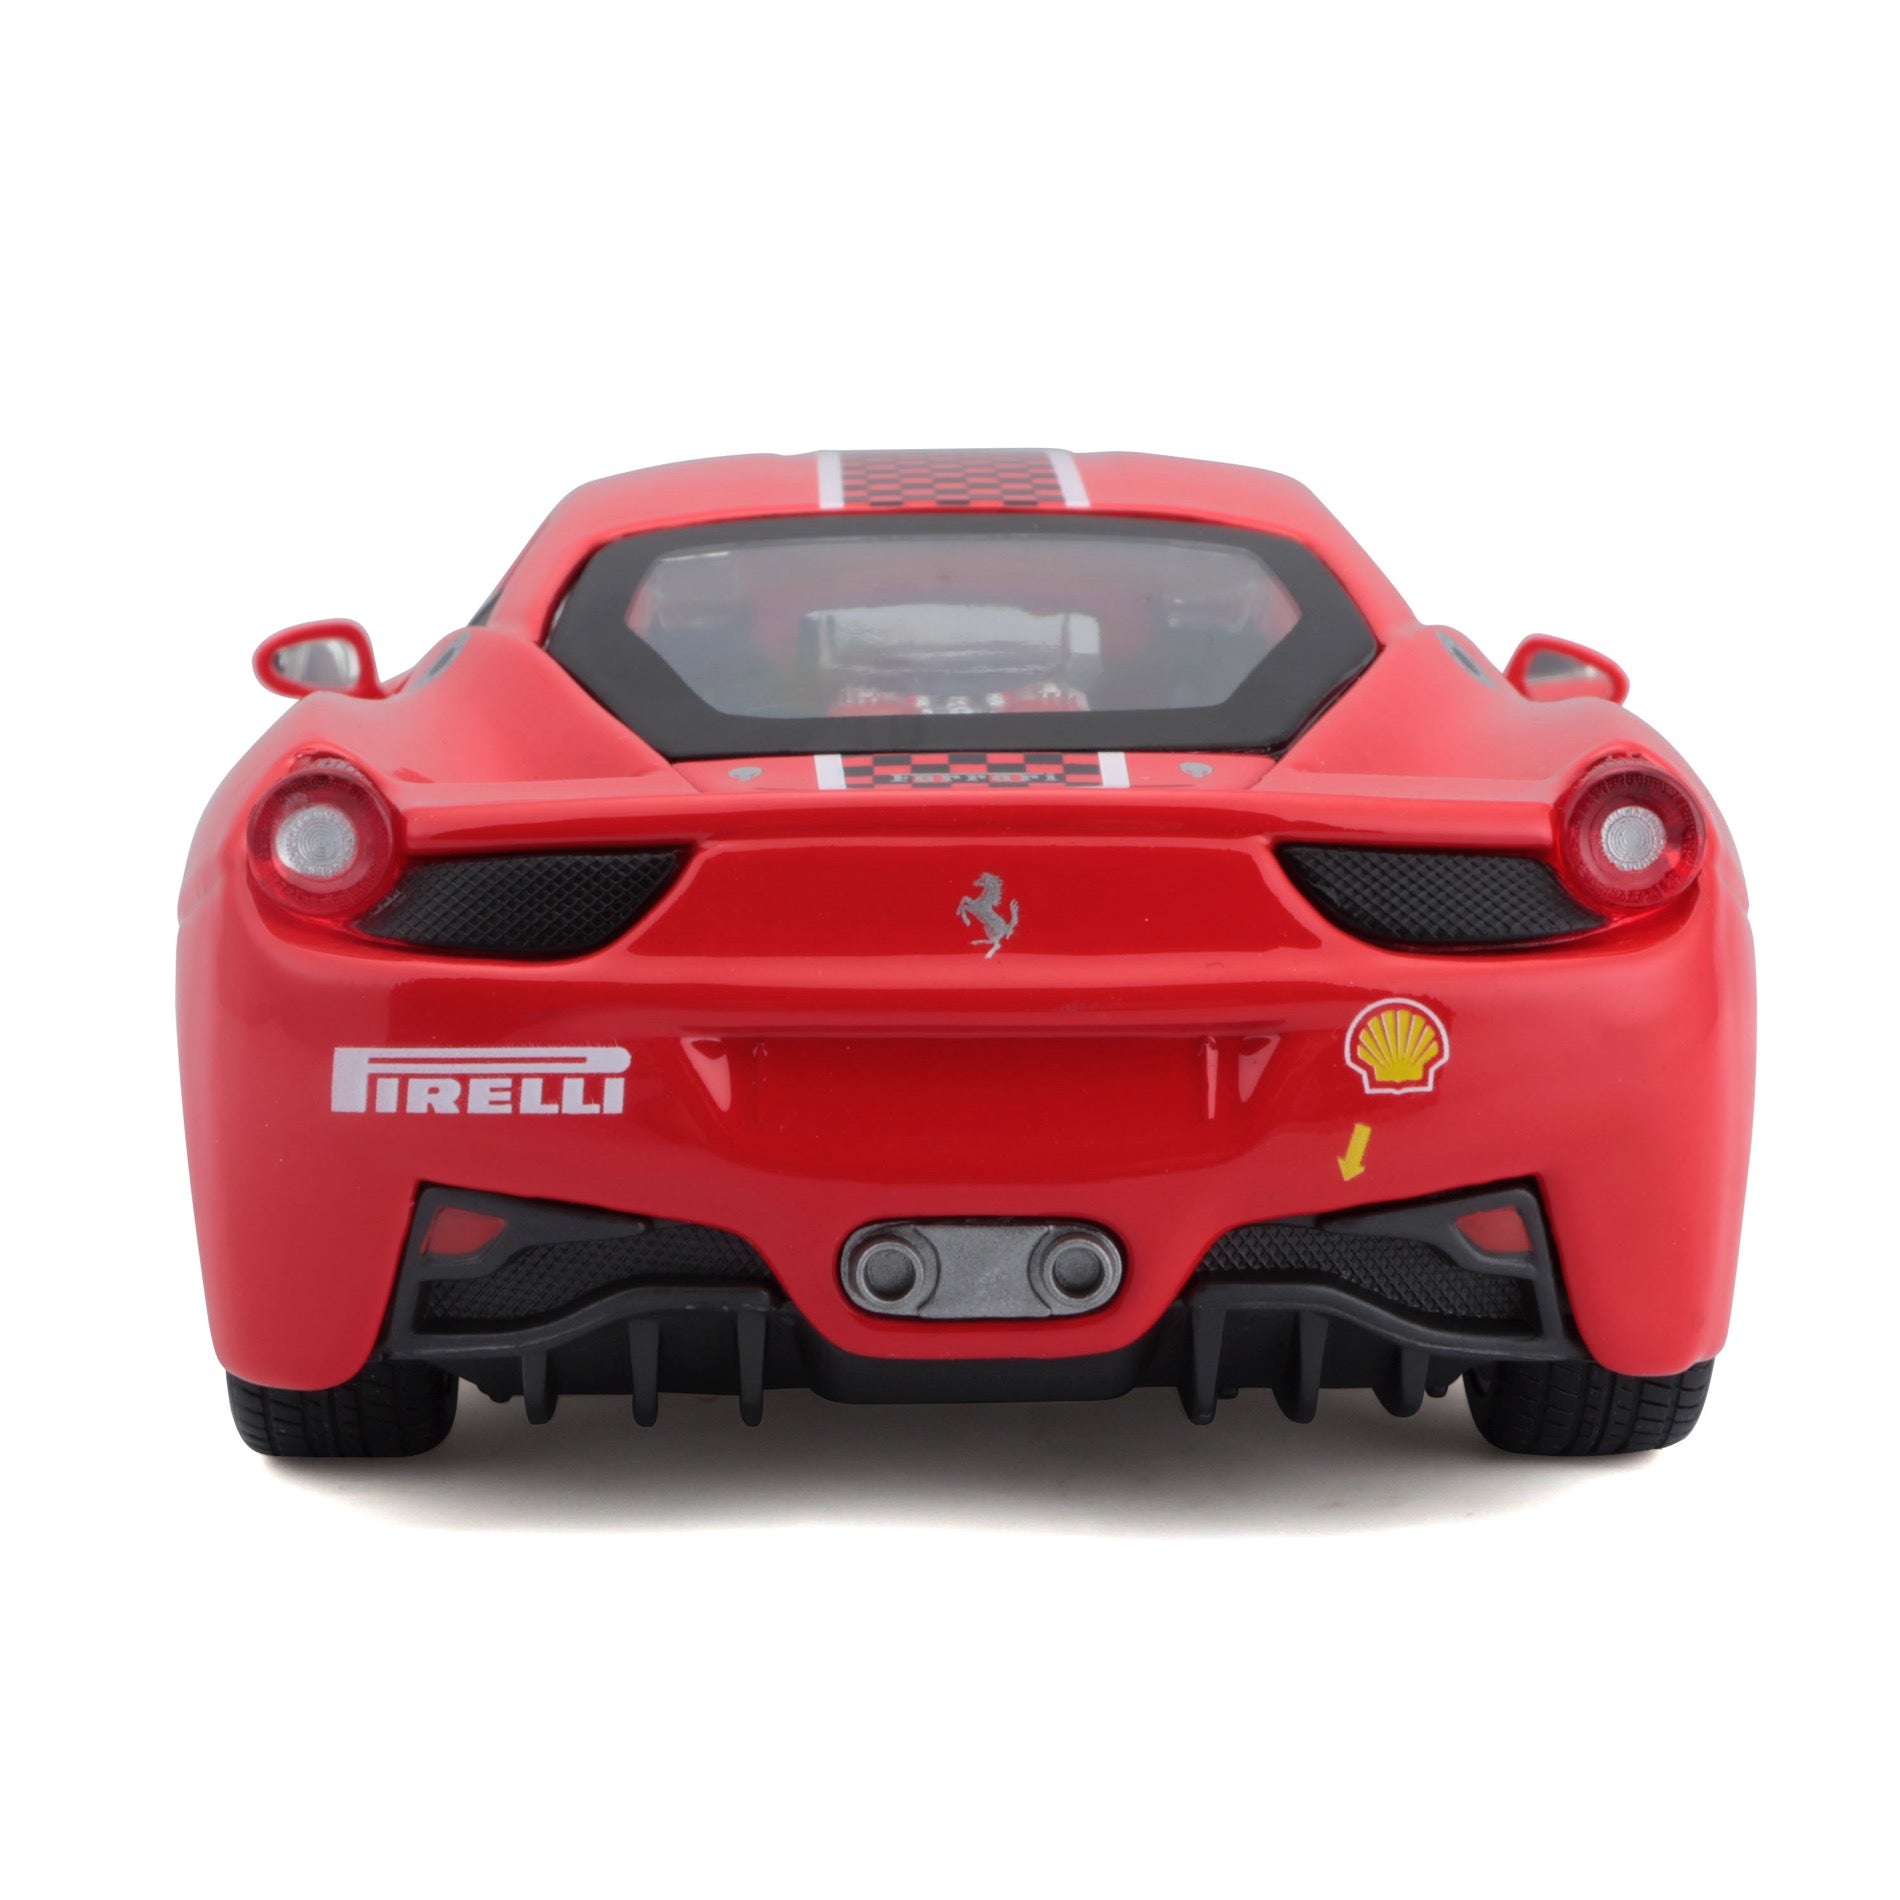 18-26302 Bburago Ferrari Racing  - 458 Challenge - 1:24